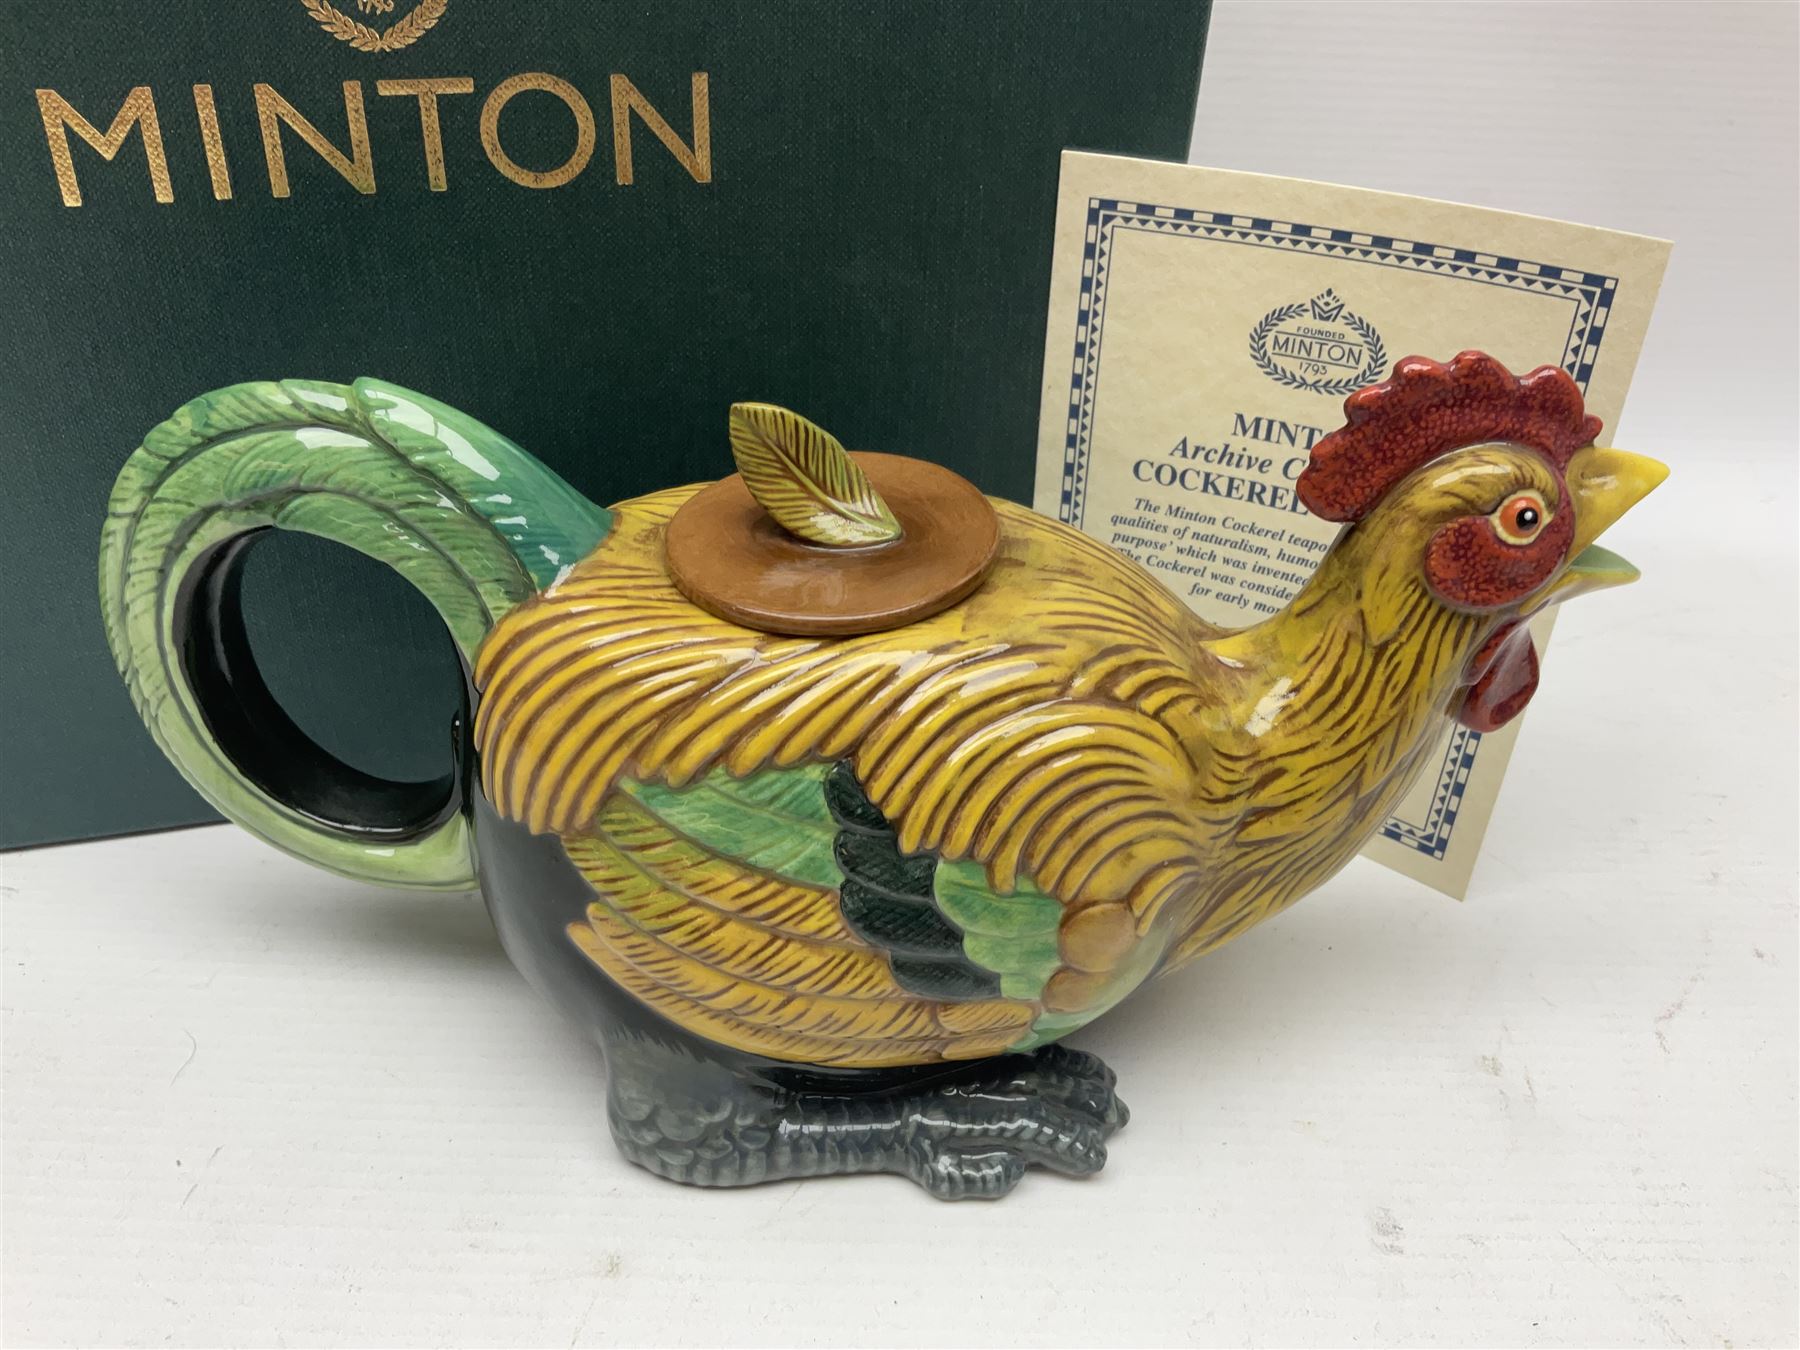 Minton Archive collection cockerel teapot - Image 10 of 12